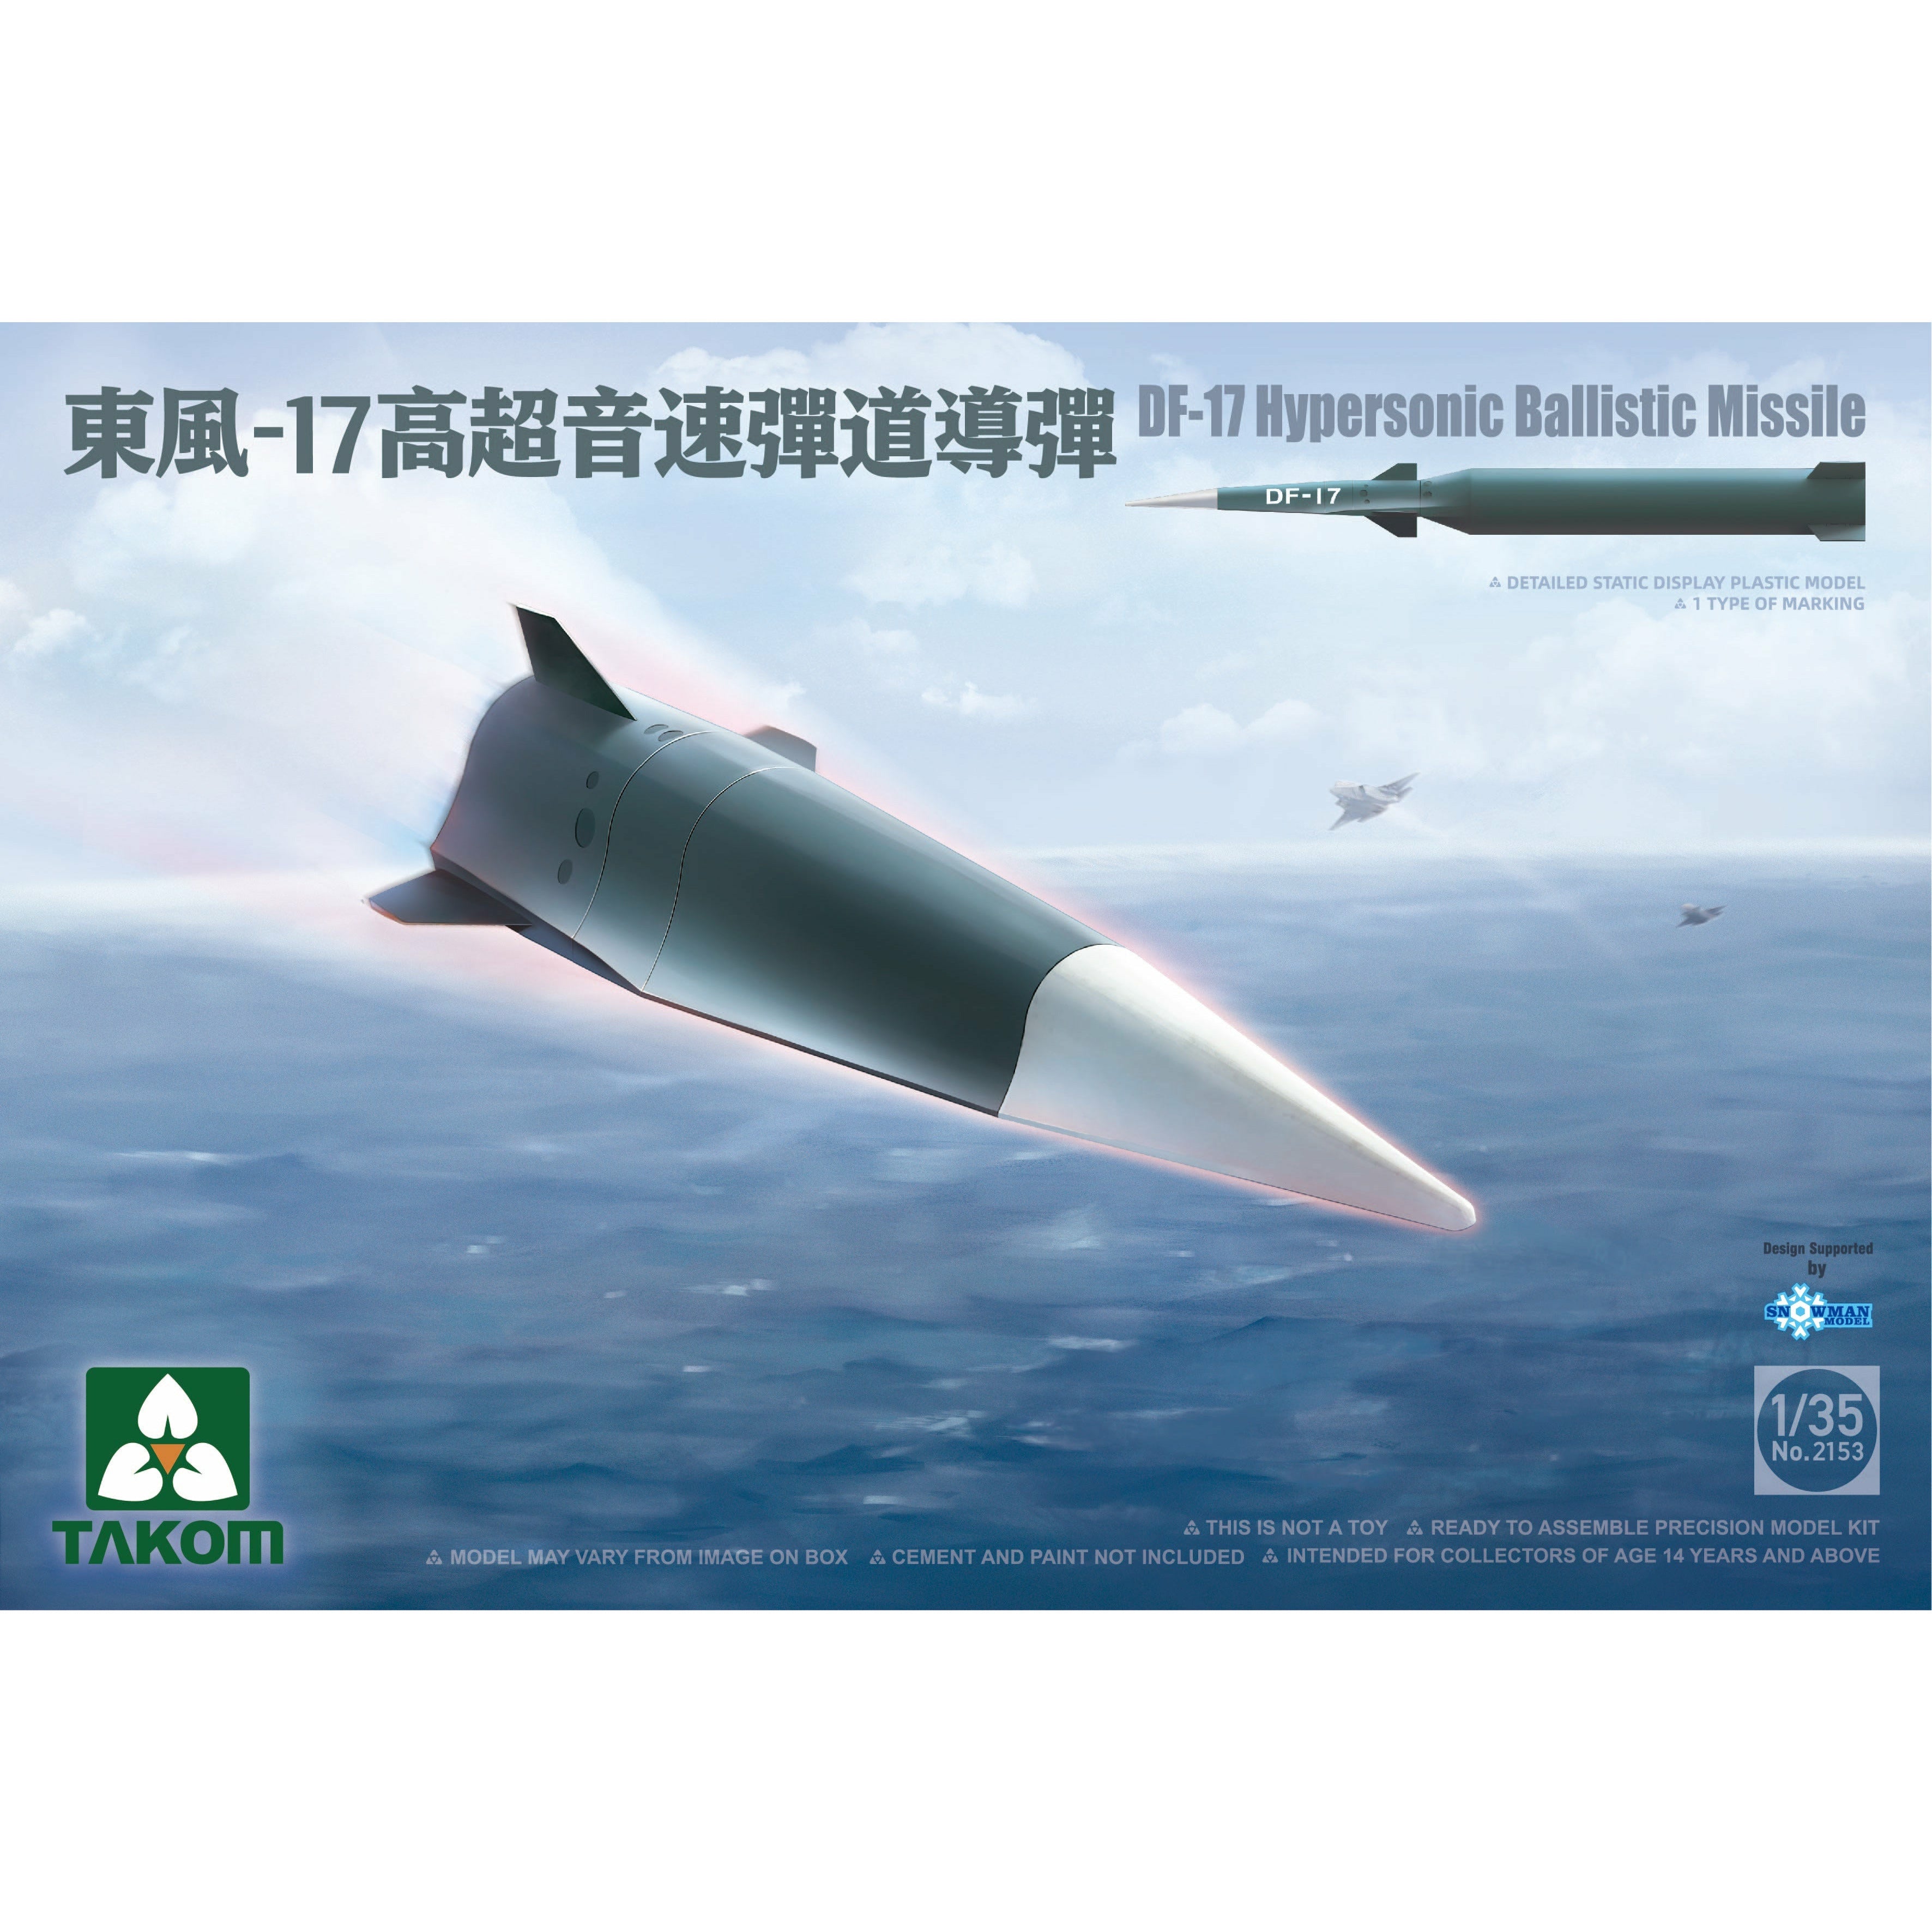 DF-17 Hypersonic Ballistic Missile 1/35 #2153 by Takom